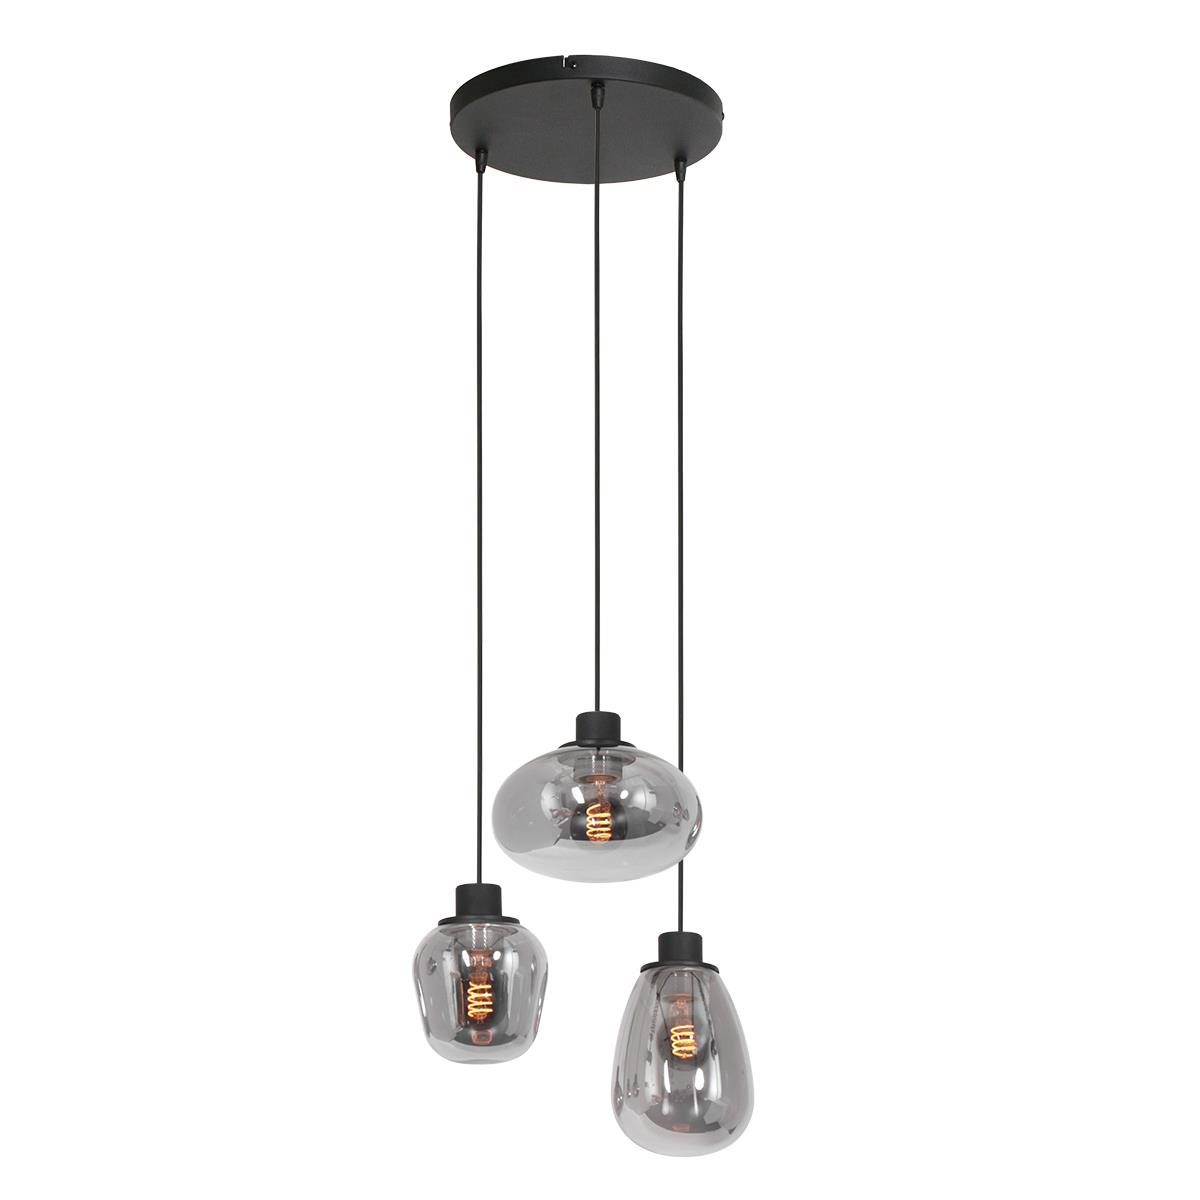 Zoek machine optimalisatie oppervlakkig stil Steinhauer Reflexion hanglamp vide lamp zwart kopen? Shop bij fonQ.be!